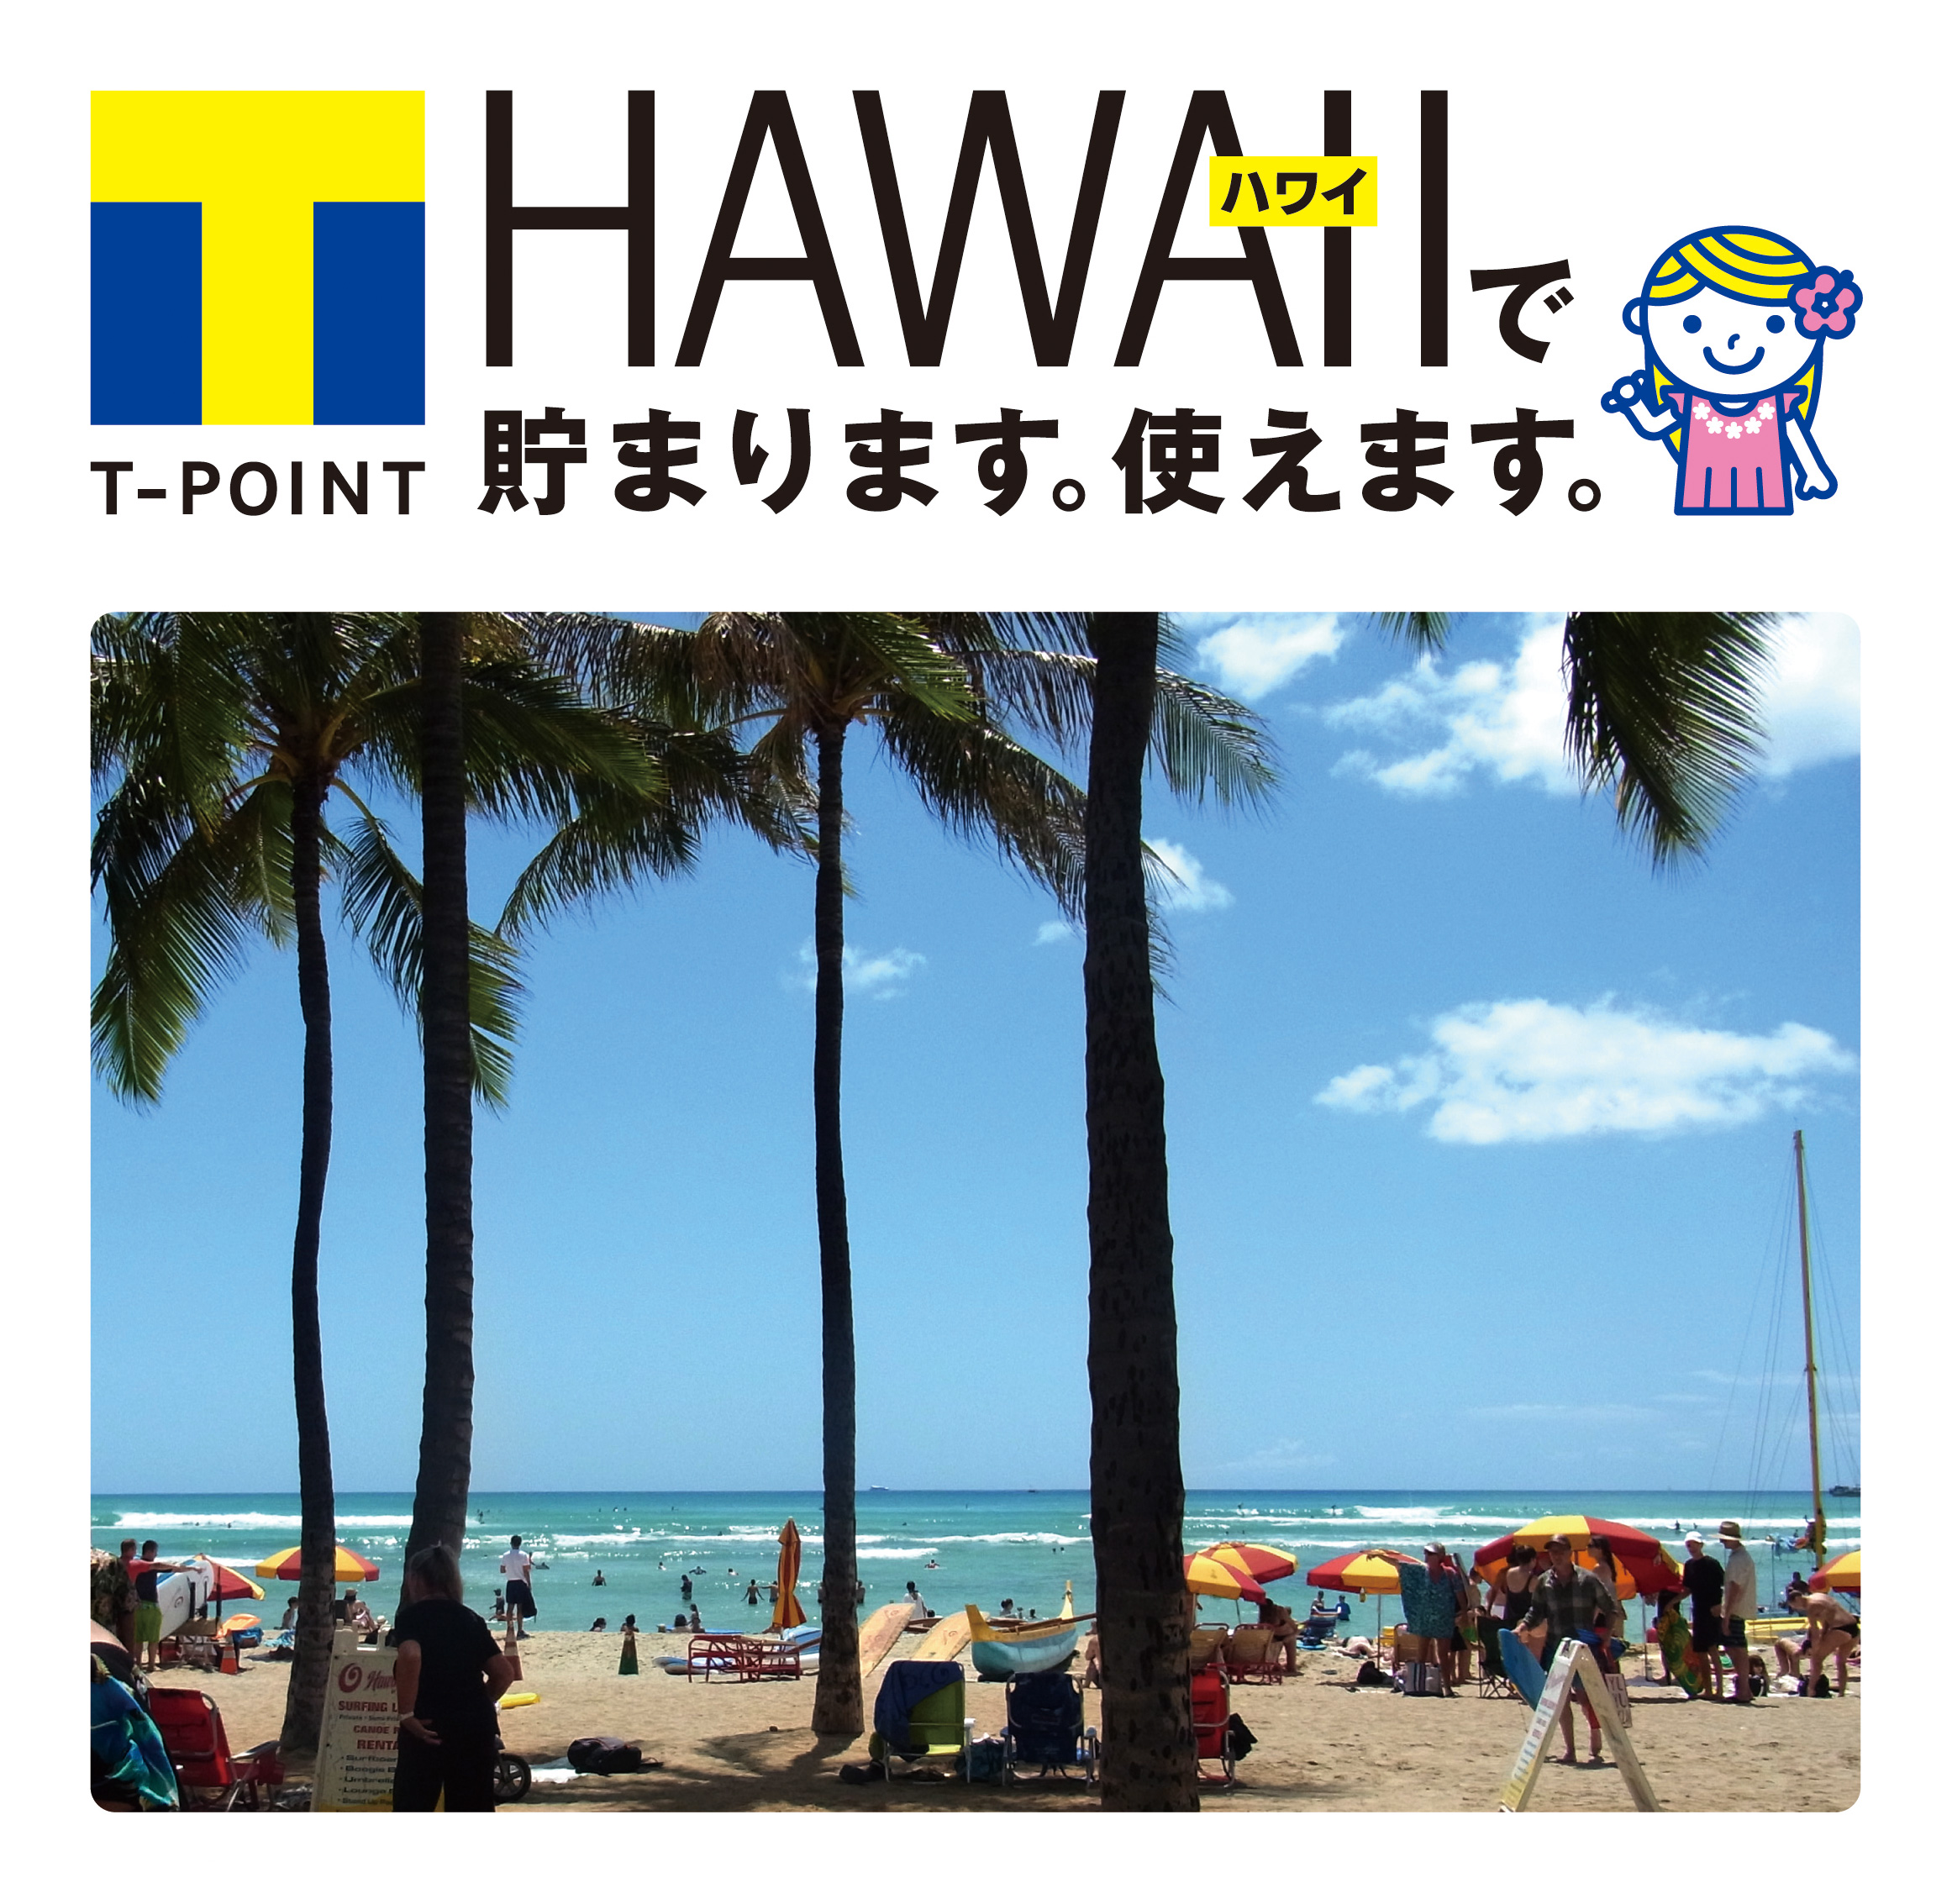 http://www.ccc.co.jp/news/img/20150407_hawaii.jpg